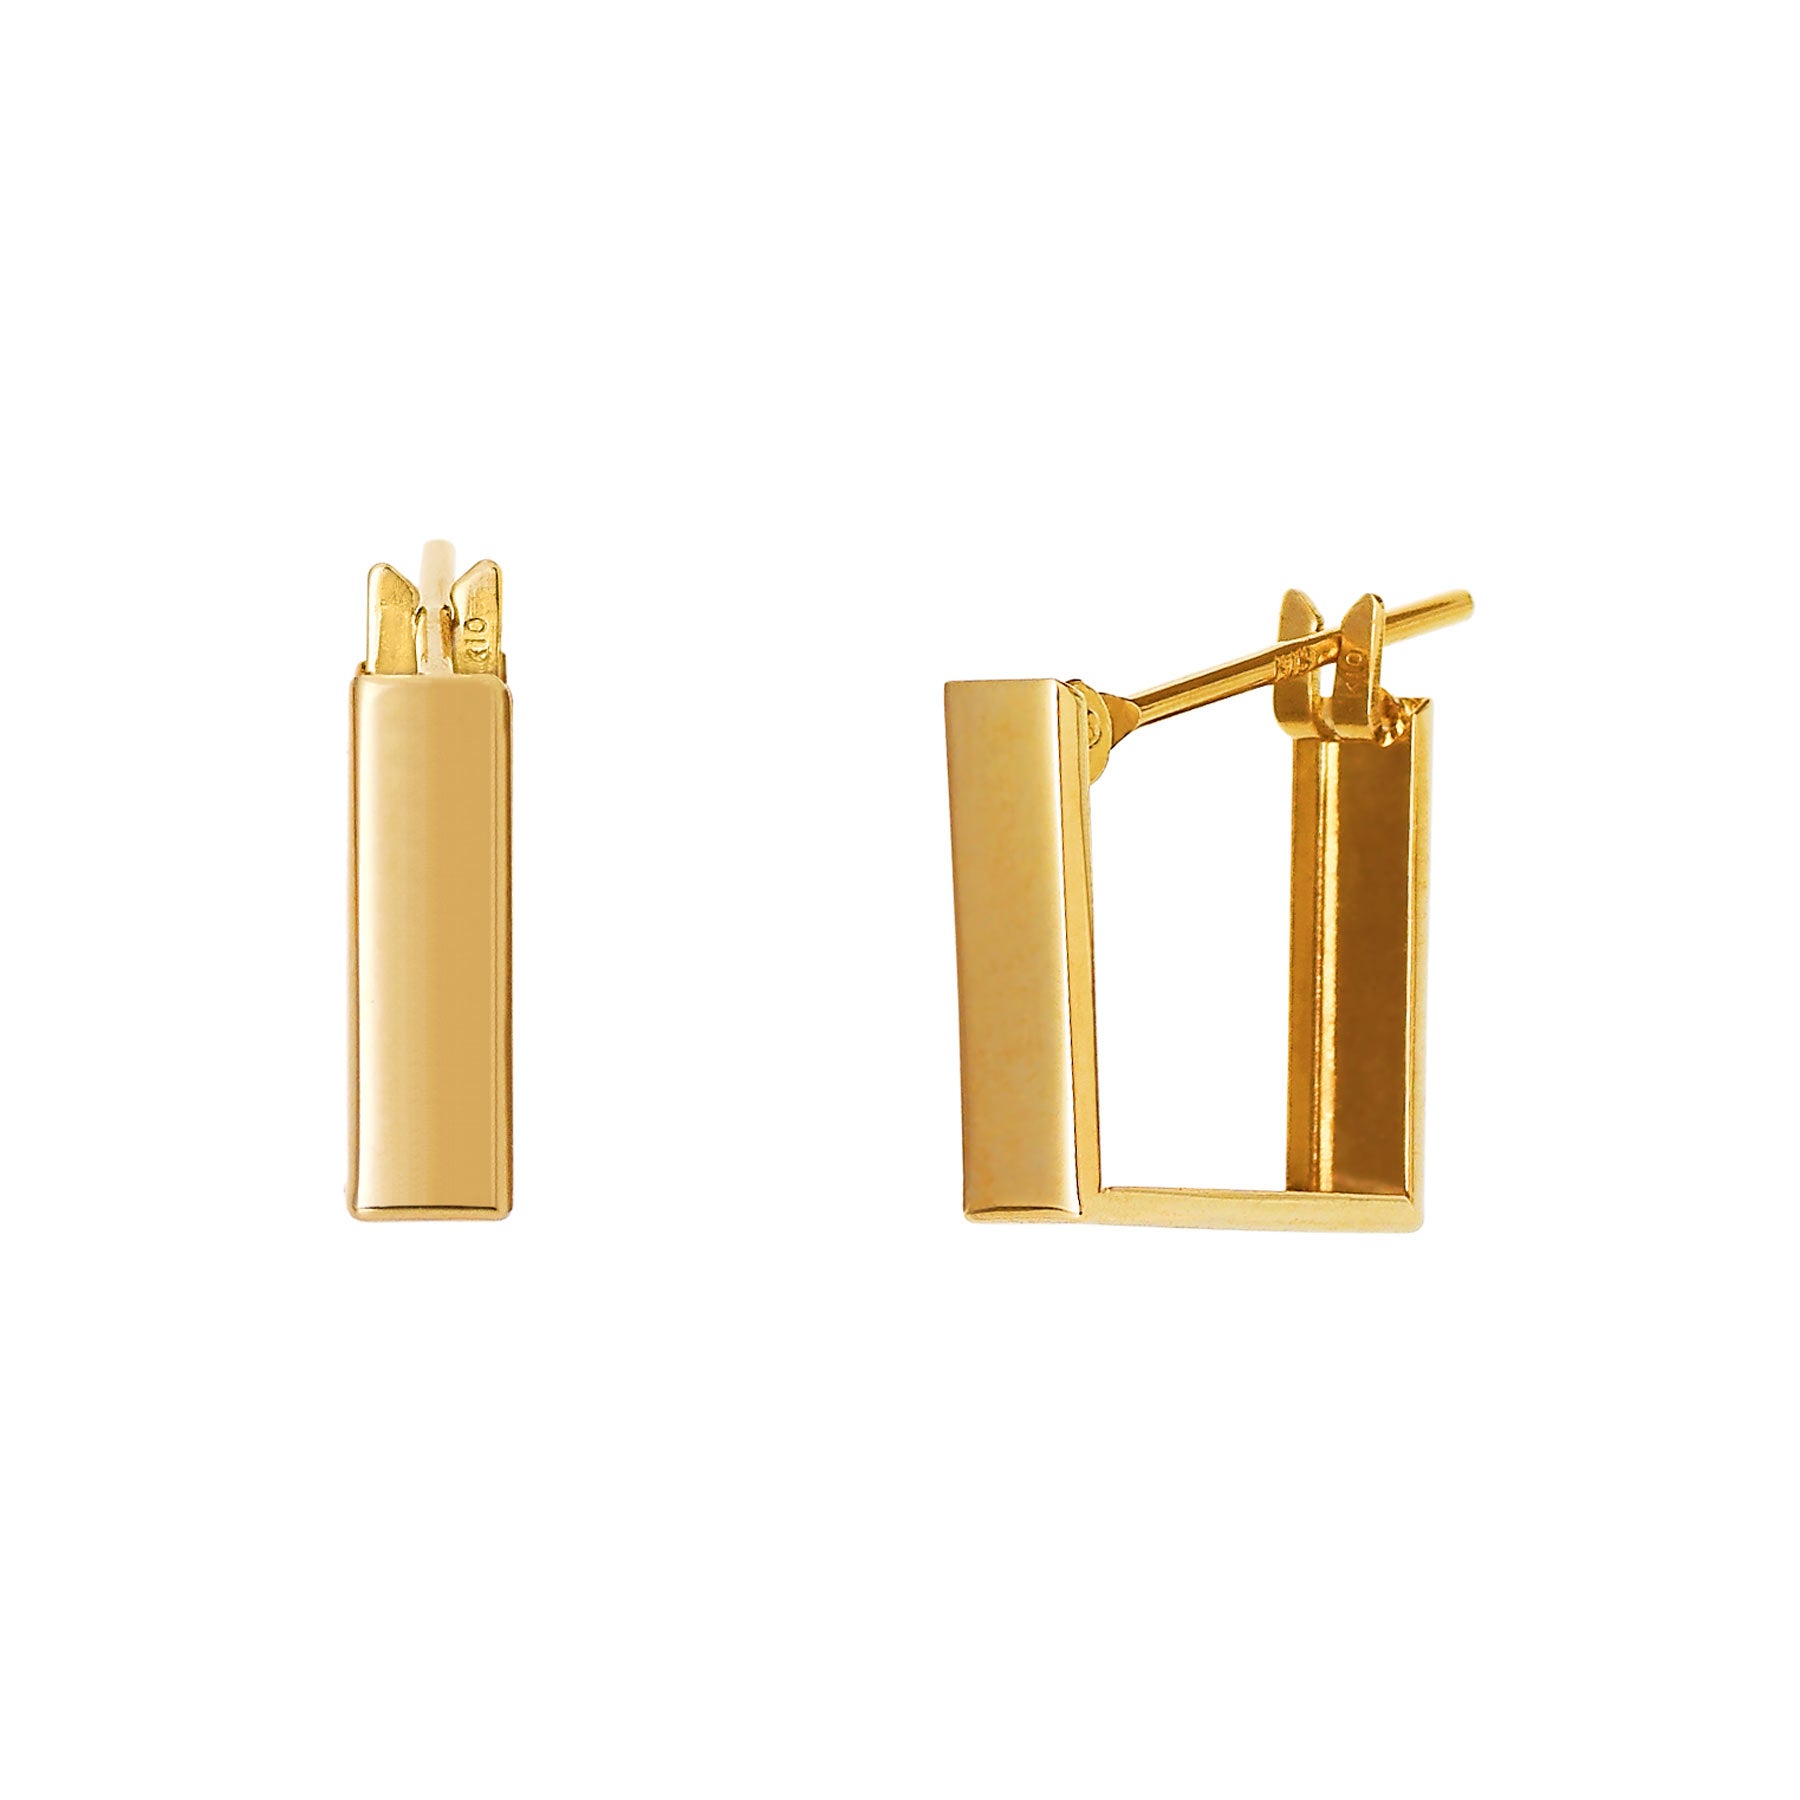 10K Yellow Gold Square Bridge Earrings - Product Image